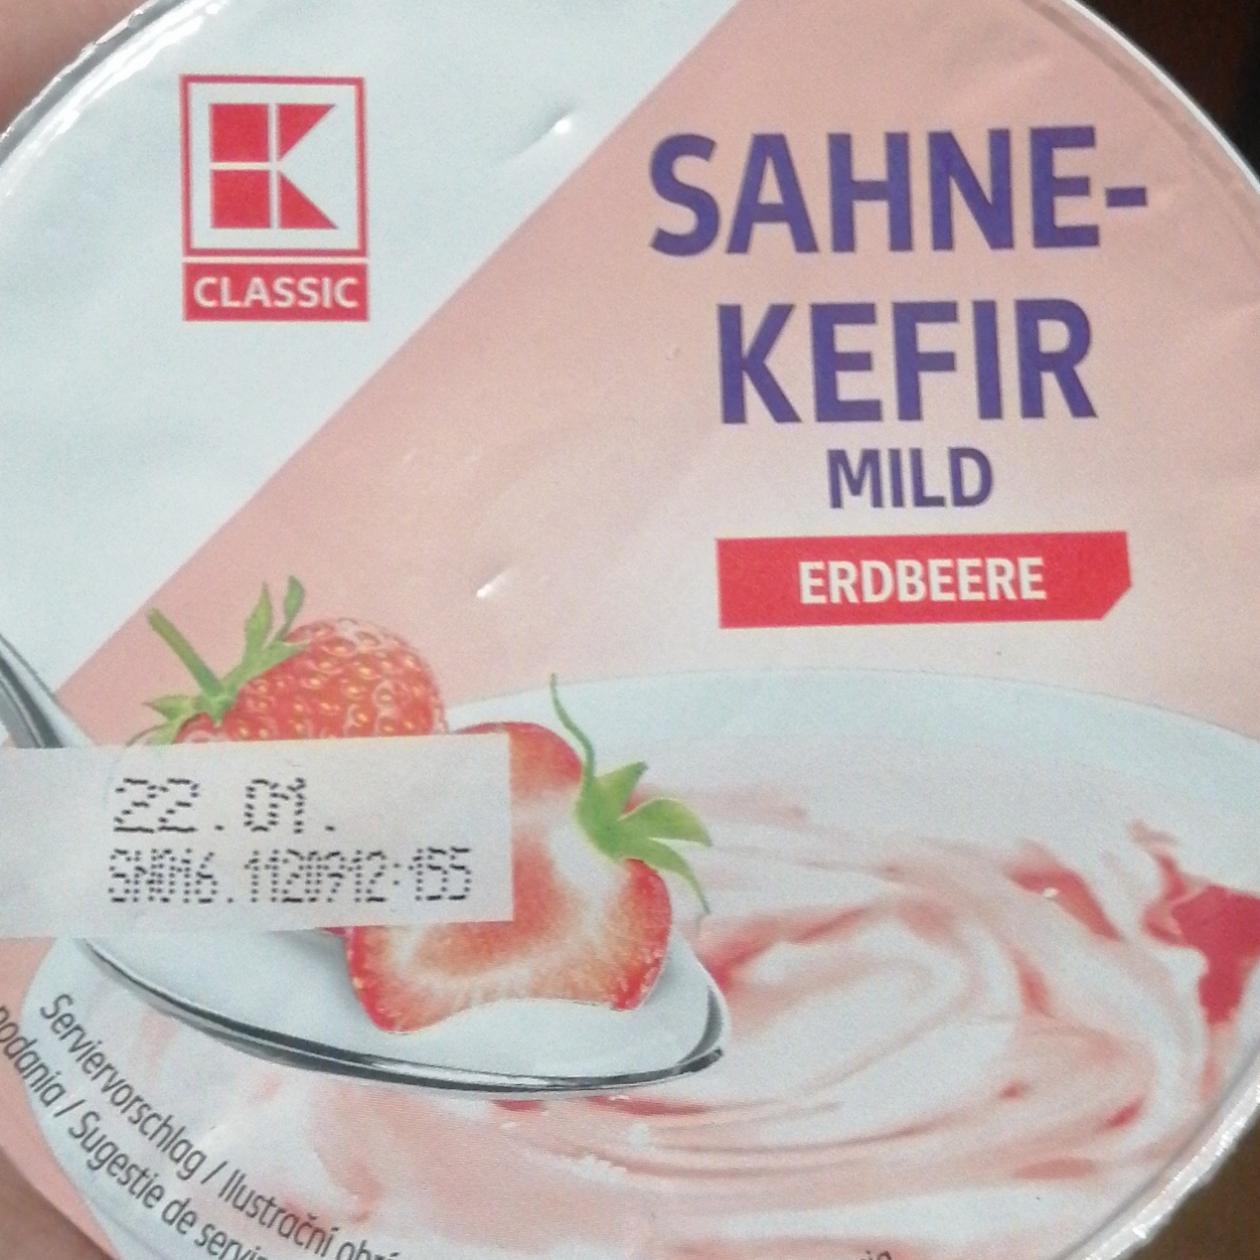 Fotografie - Sahne-kefir mild Erdbeere K-Classic